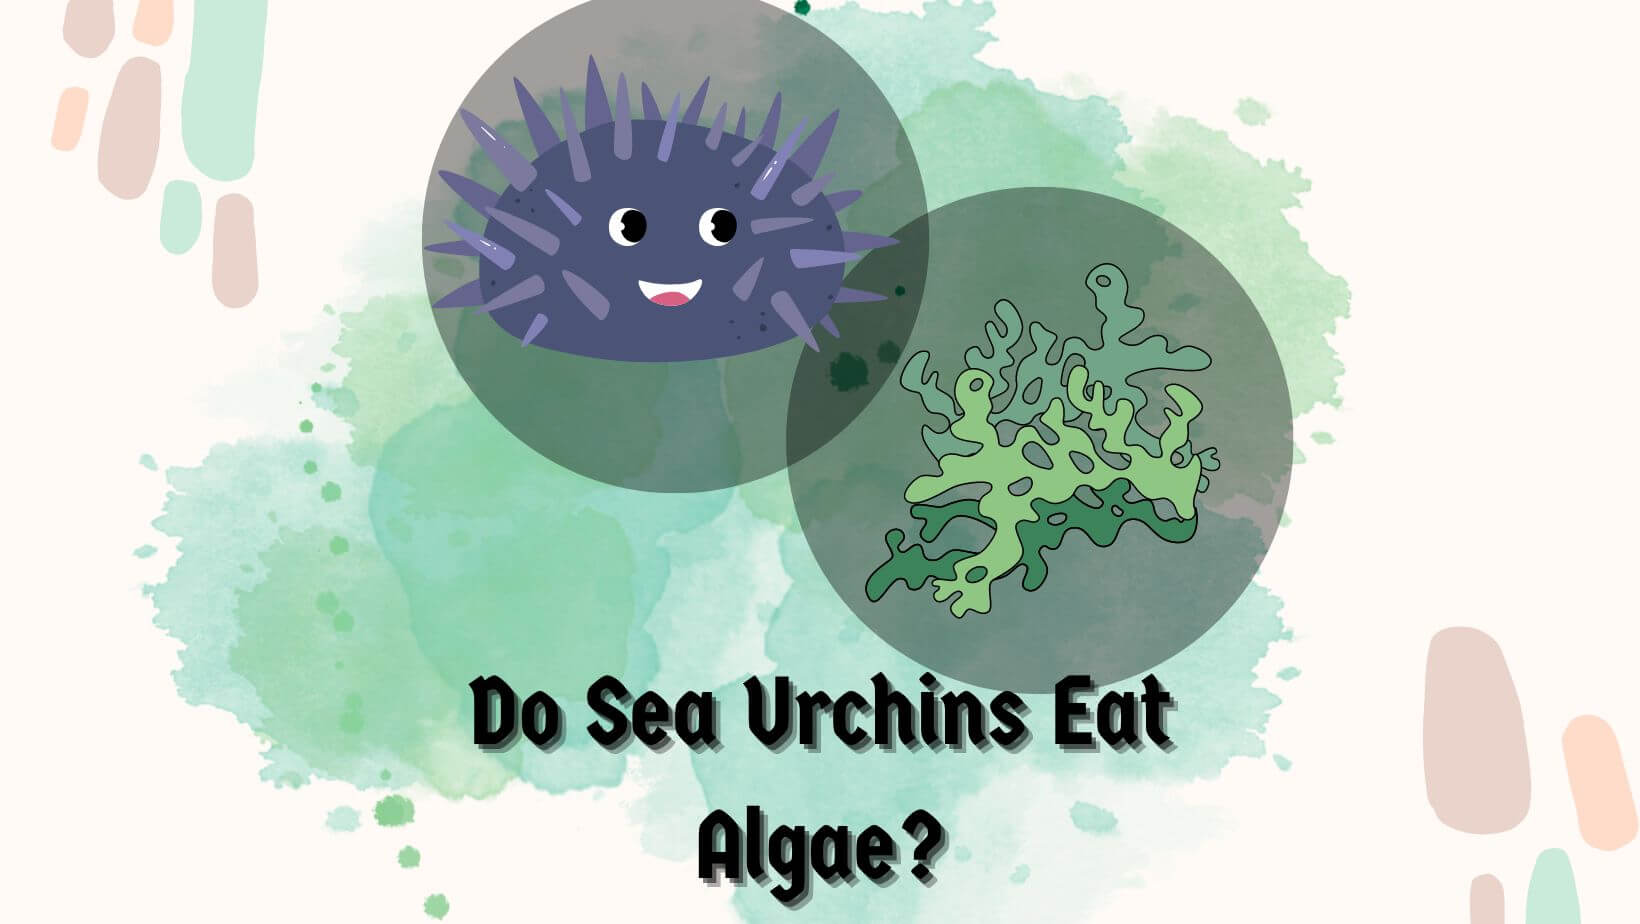 DO SEA URCHINS EAT ALGAE?